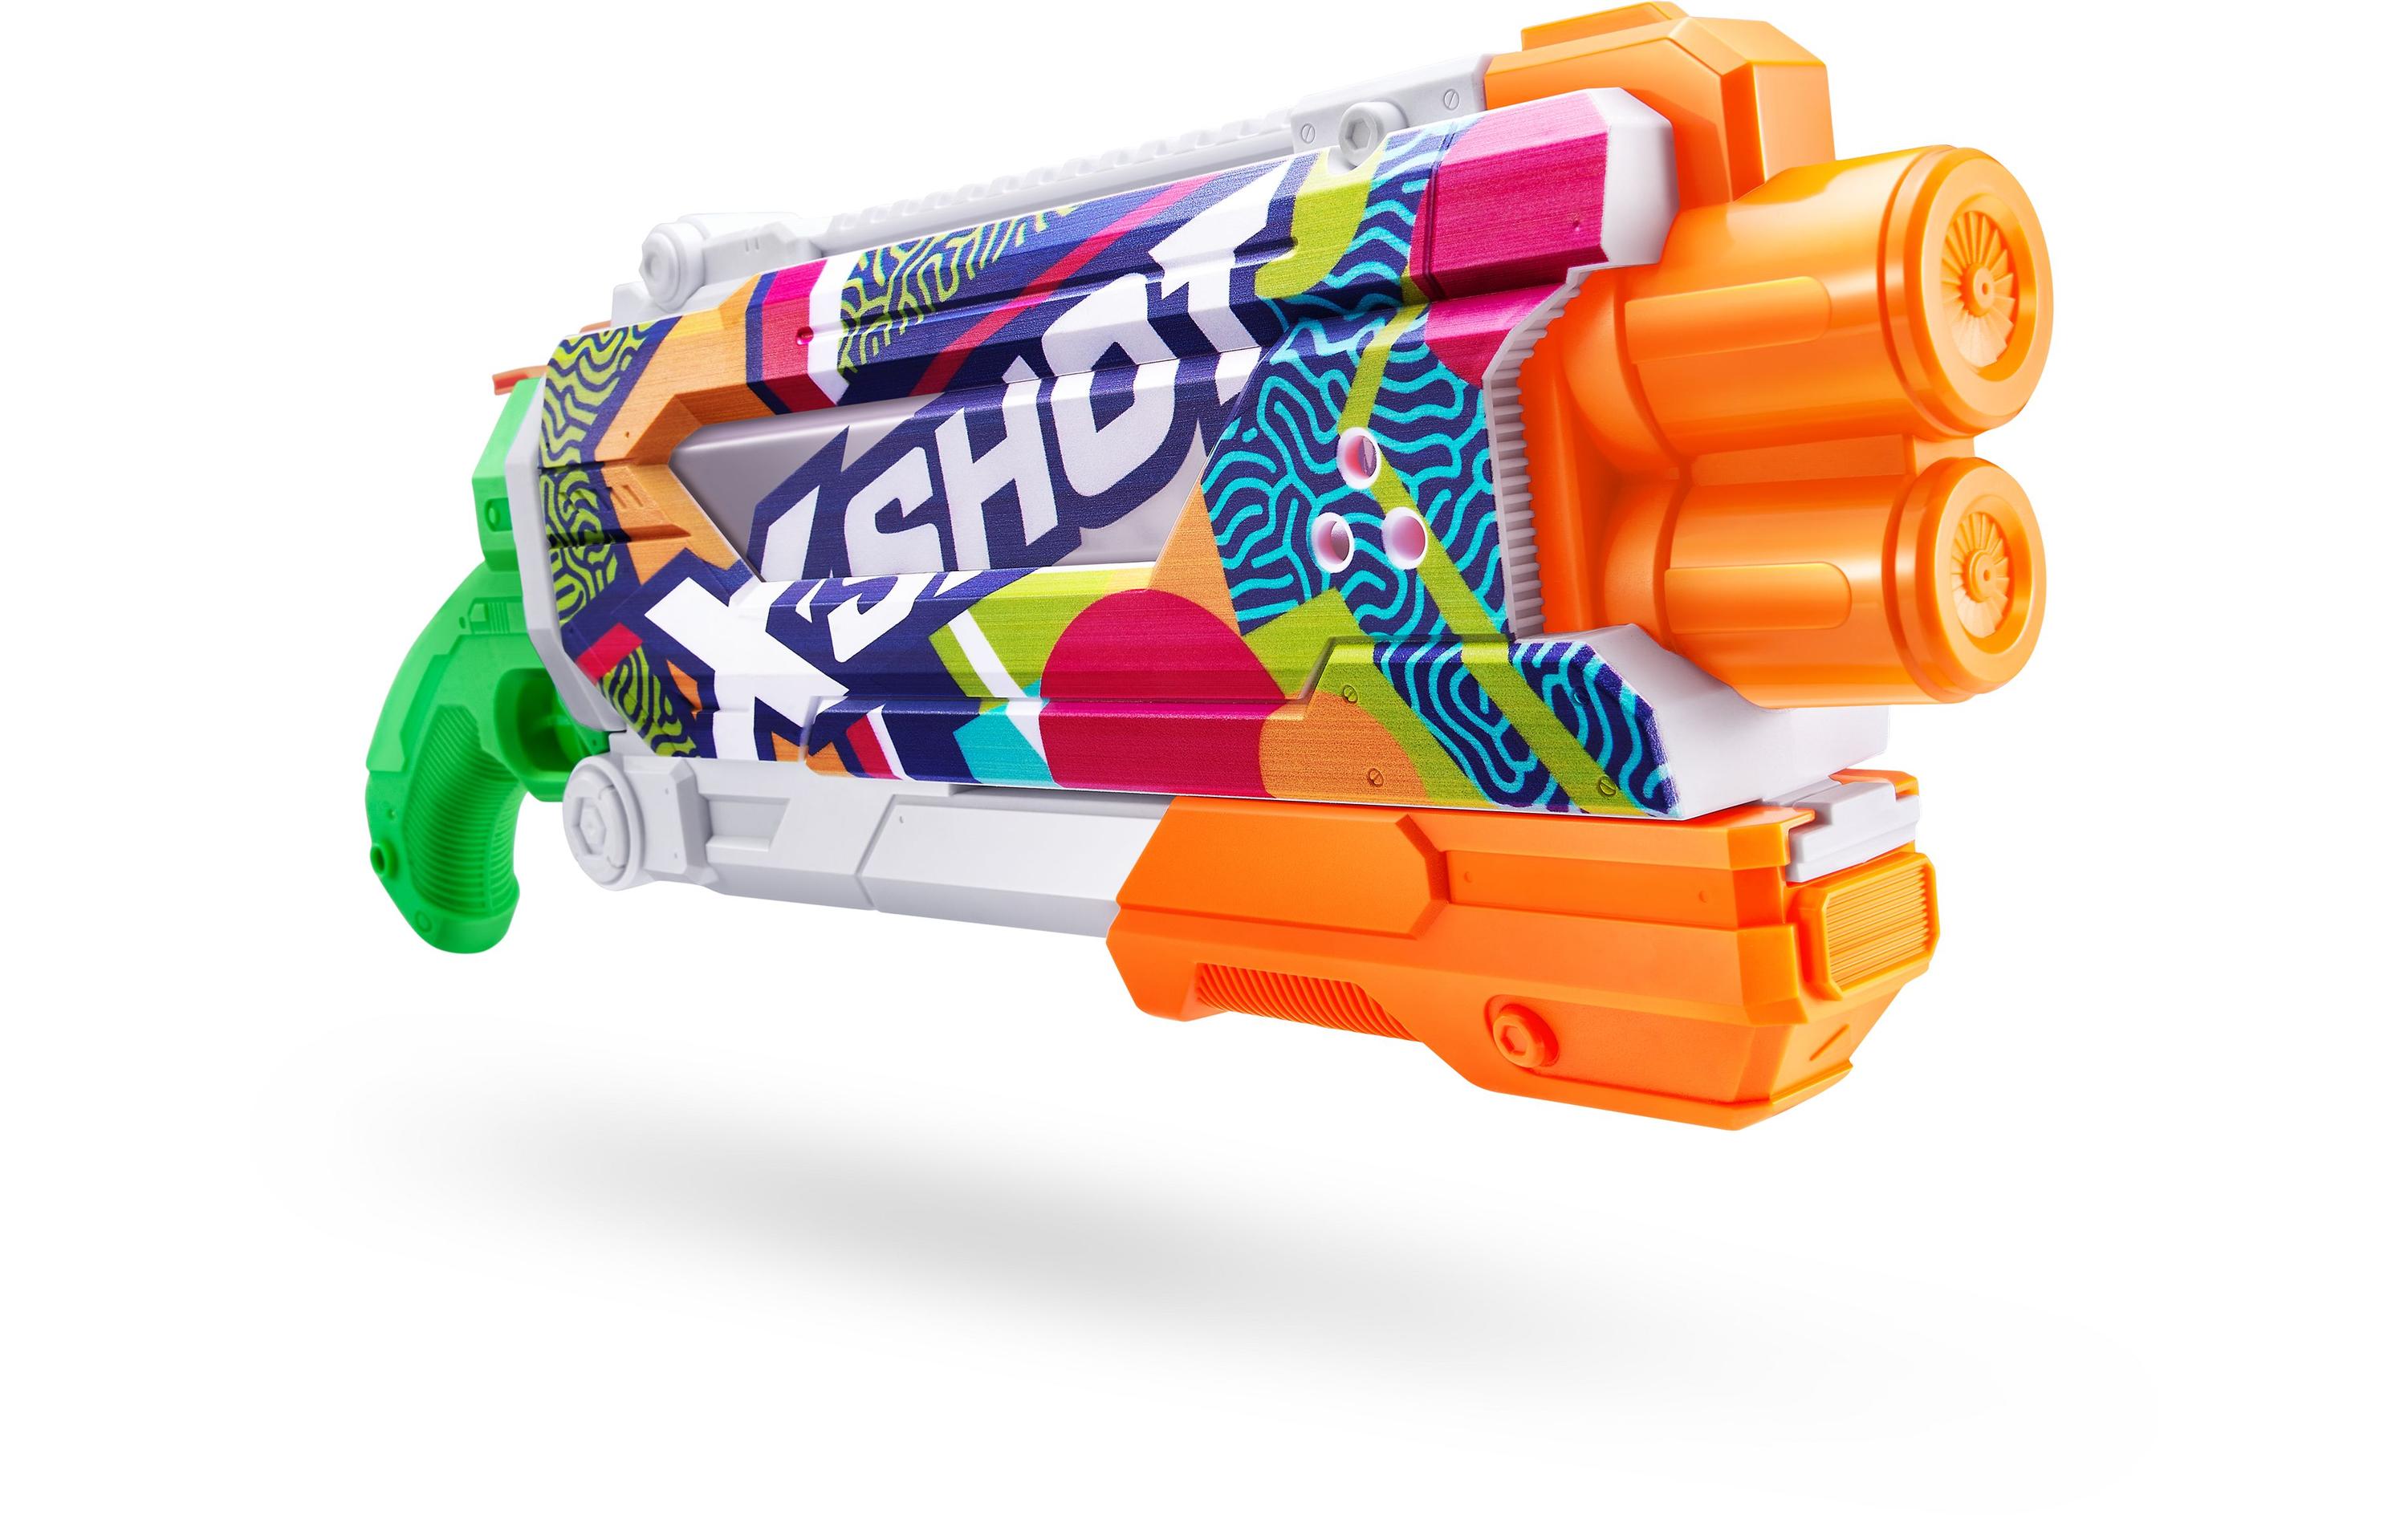 X-Shot X-Shot Water Skins Pump Action Fast Fill Ripple 800 ml